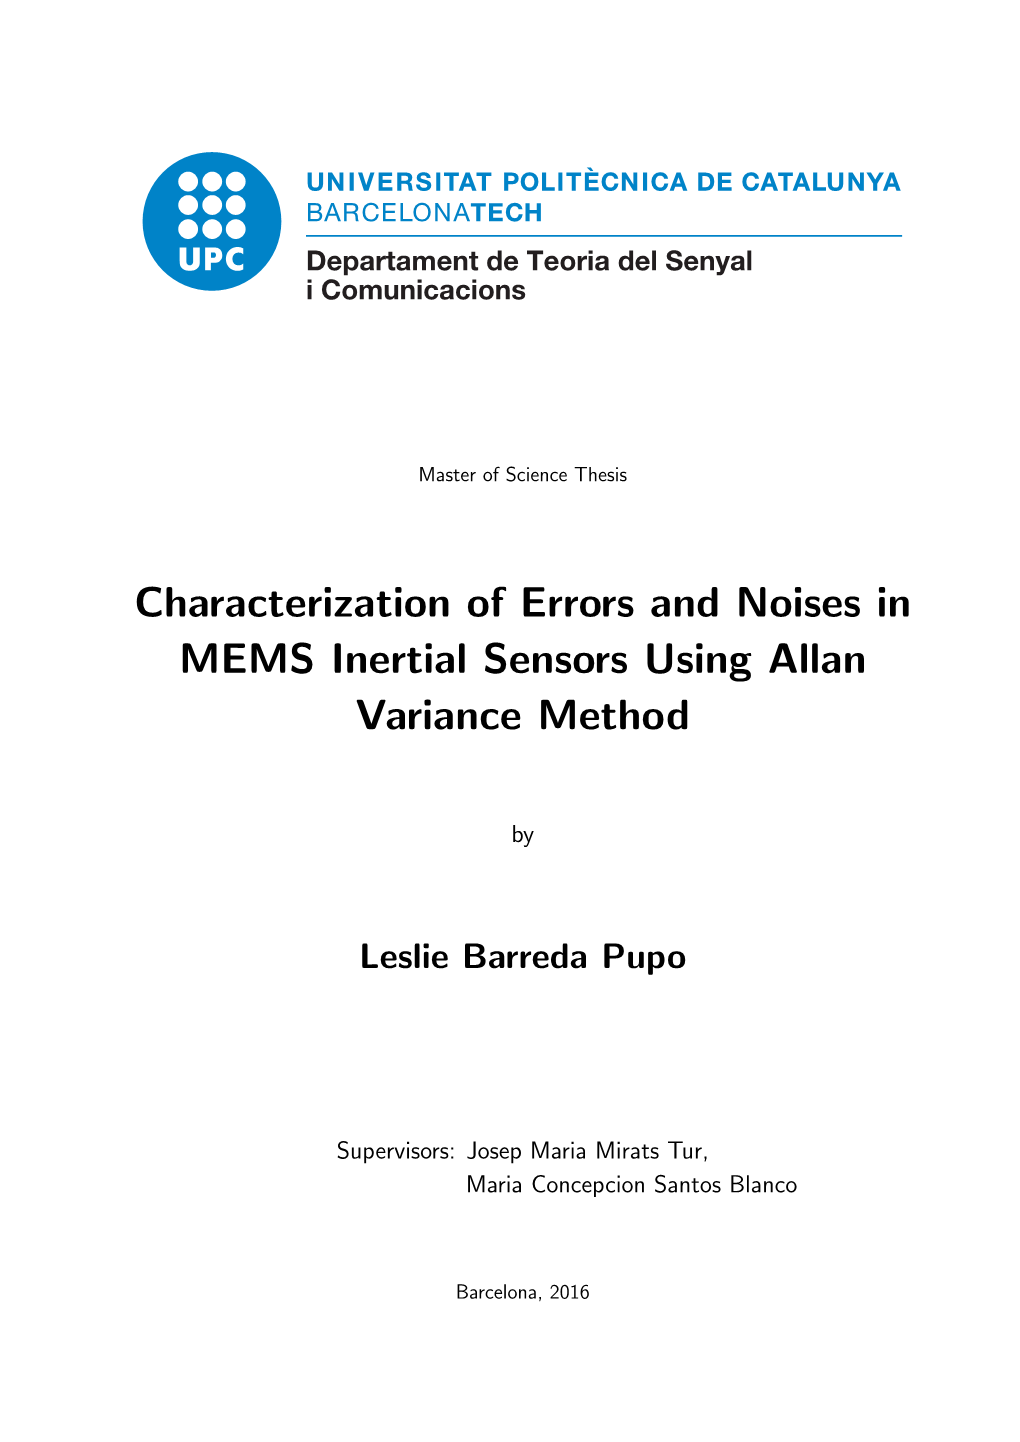 Characterization of Errors and Noises in MEMS Inertial Sensors Using Allan Variance Method